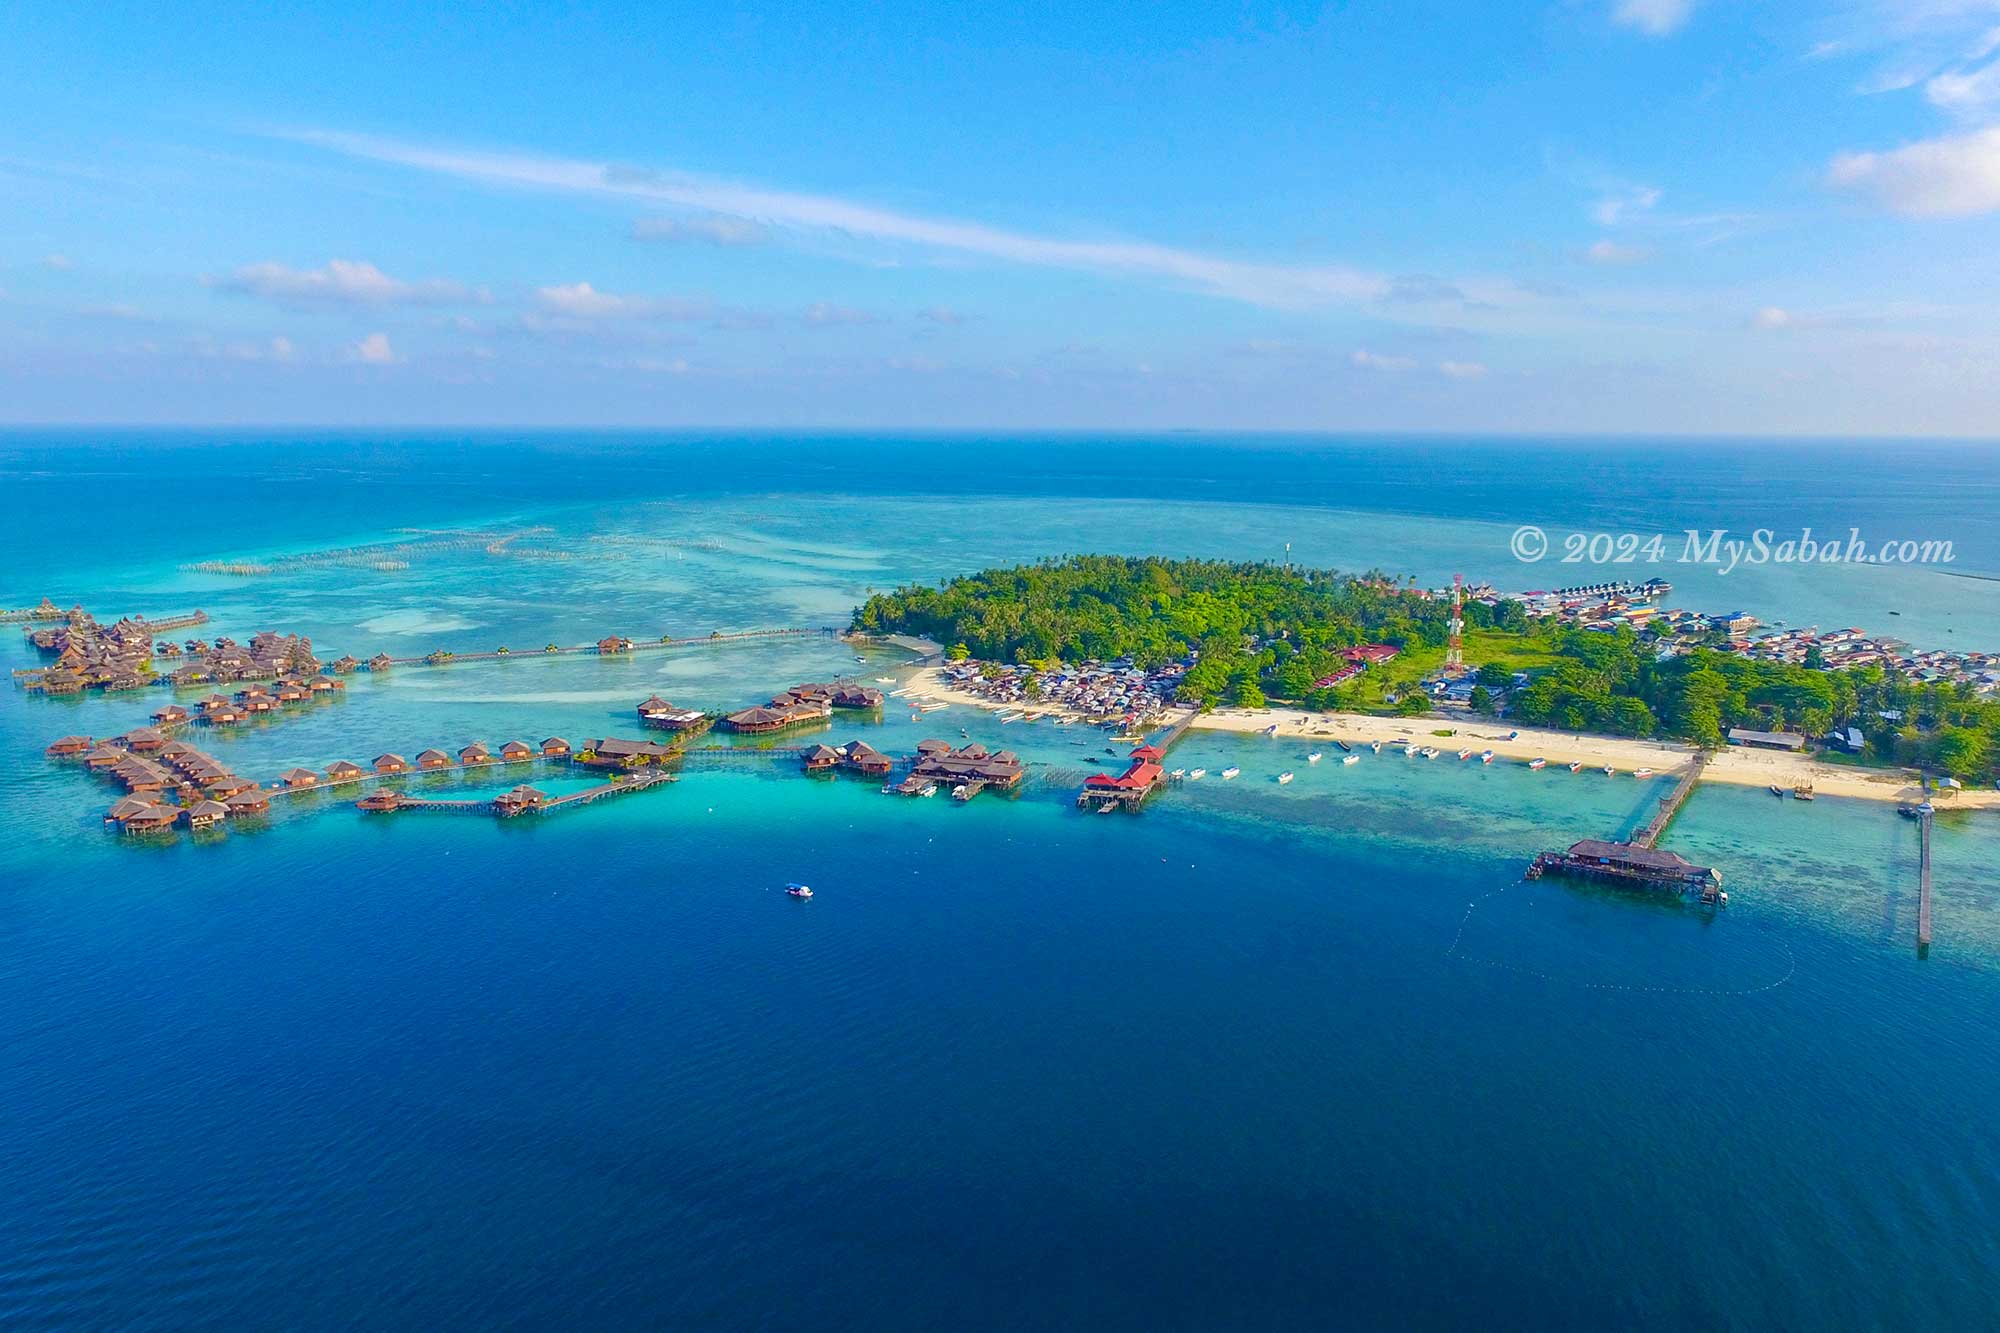 Aerial view of Mabul Island